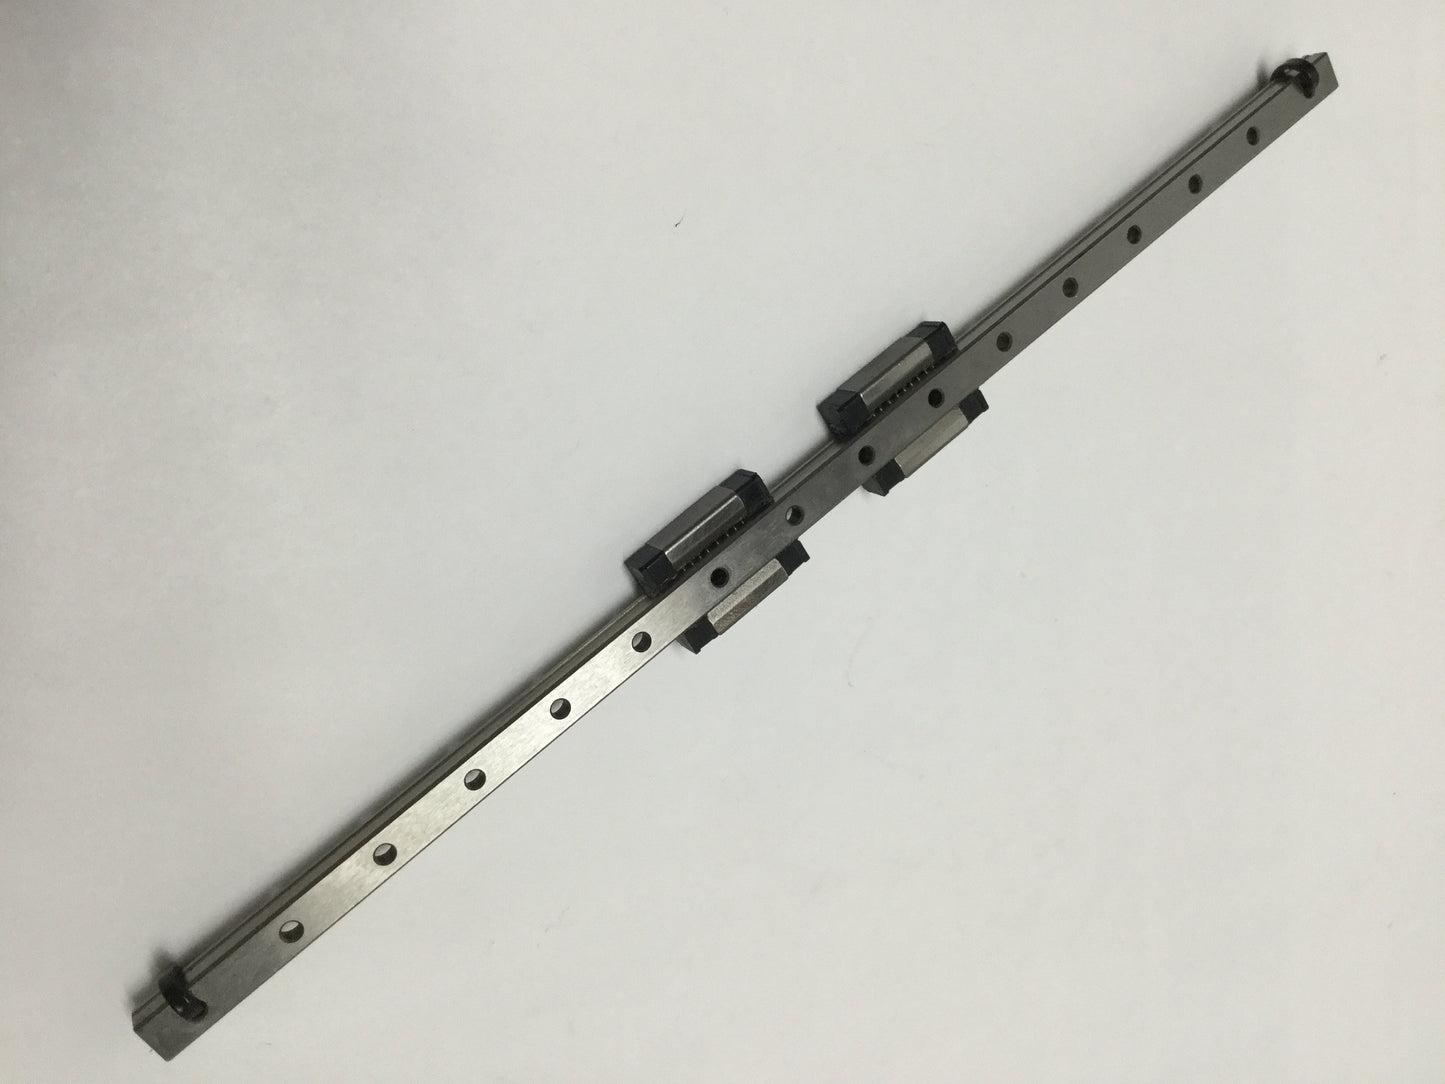 Used IKO LWL7 Linear Ball Bearing Slide Carriage Blocks (x2) on 240mm Guide Rail